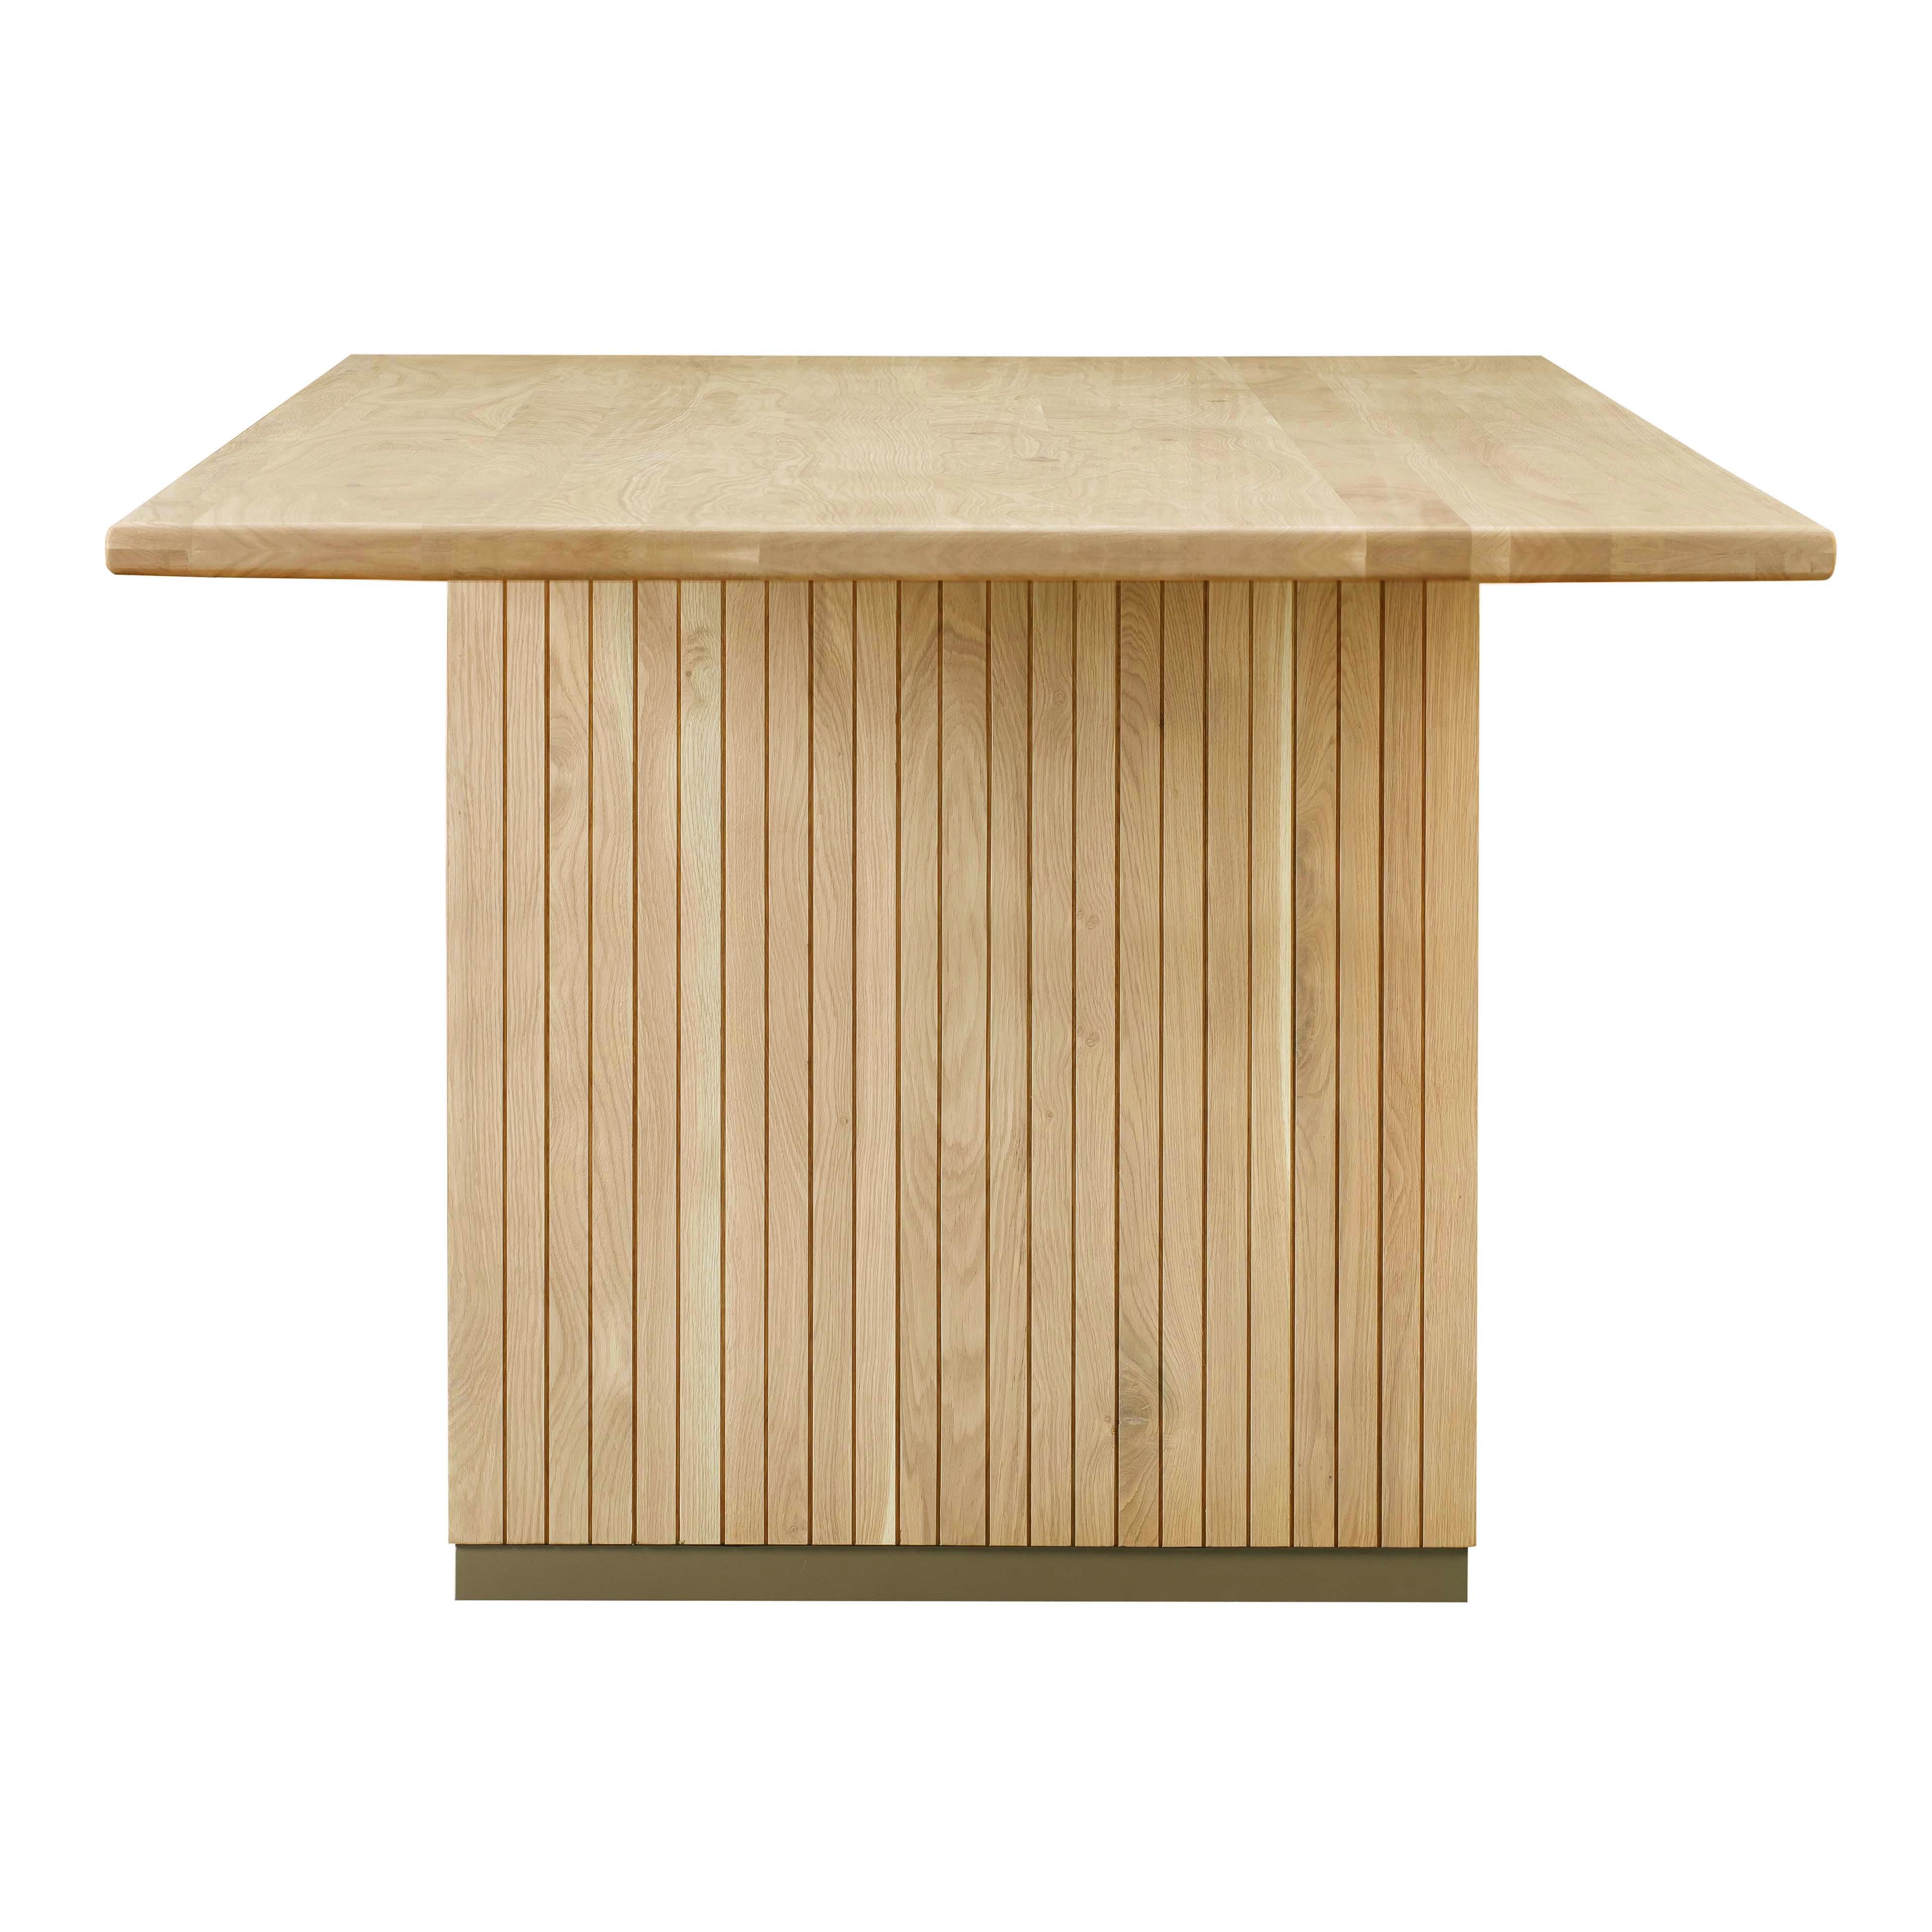 Chelsea Natural Oak Wood Rectangular Dining Table - Image 2